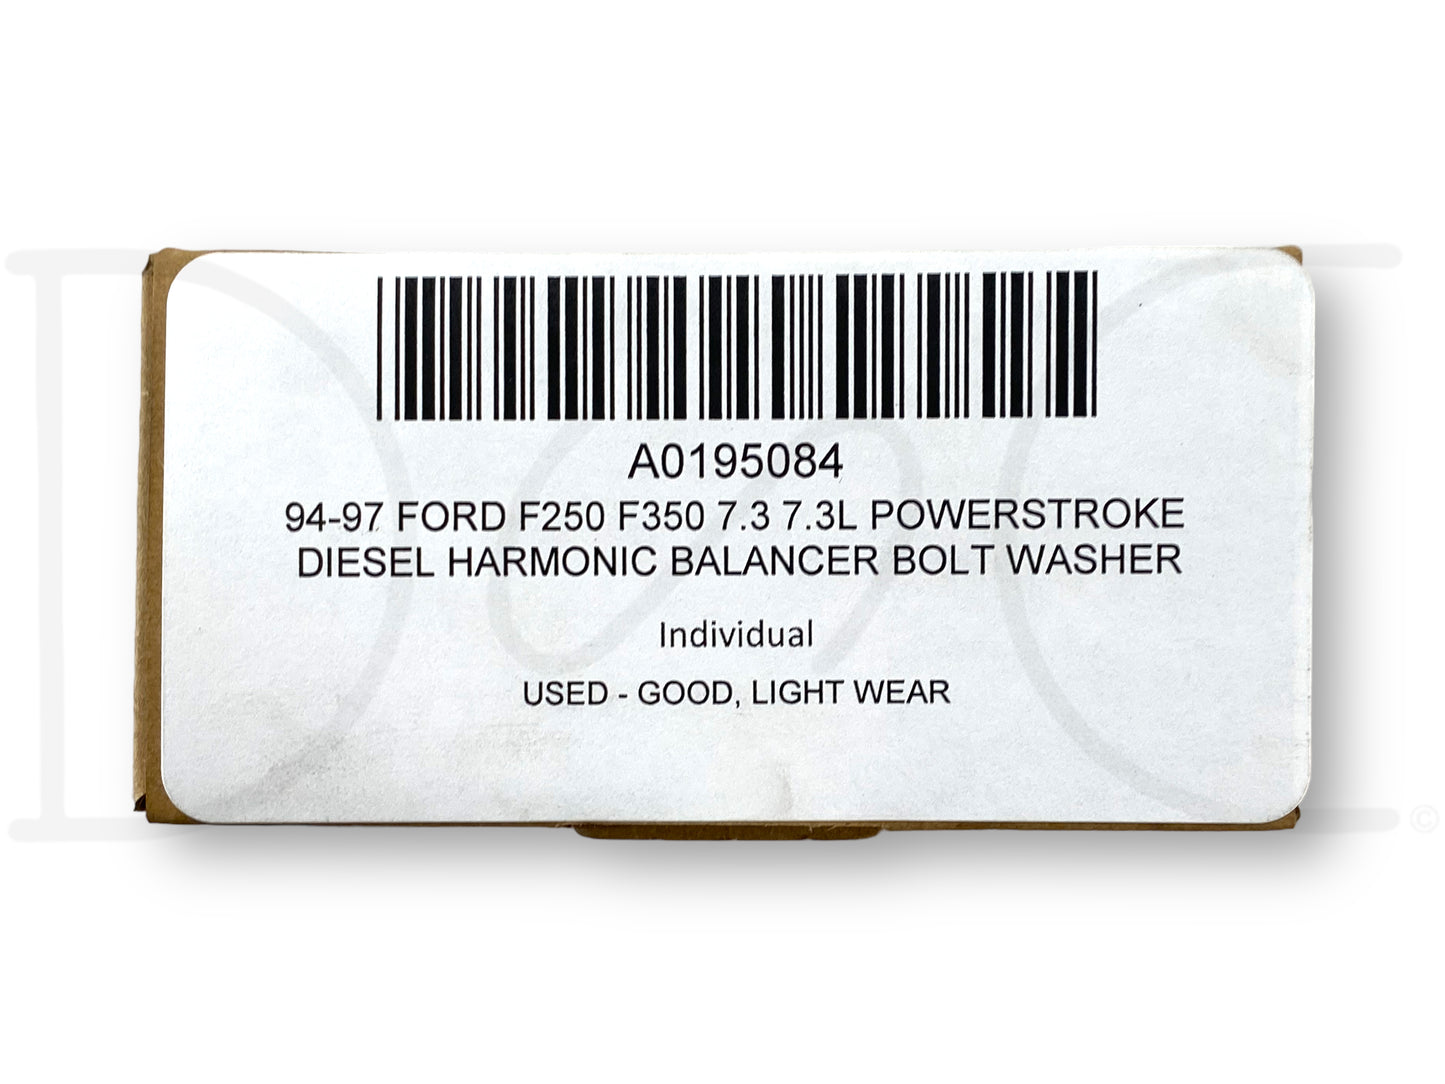 94-97 Ford F250 F350 7.3 7.3L Powerstroke Diesel Harmonic Balancer Bolt Washer